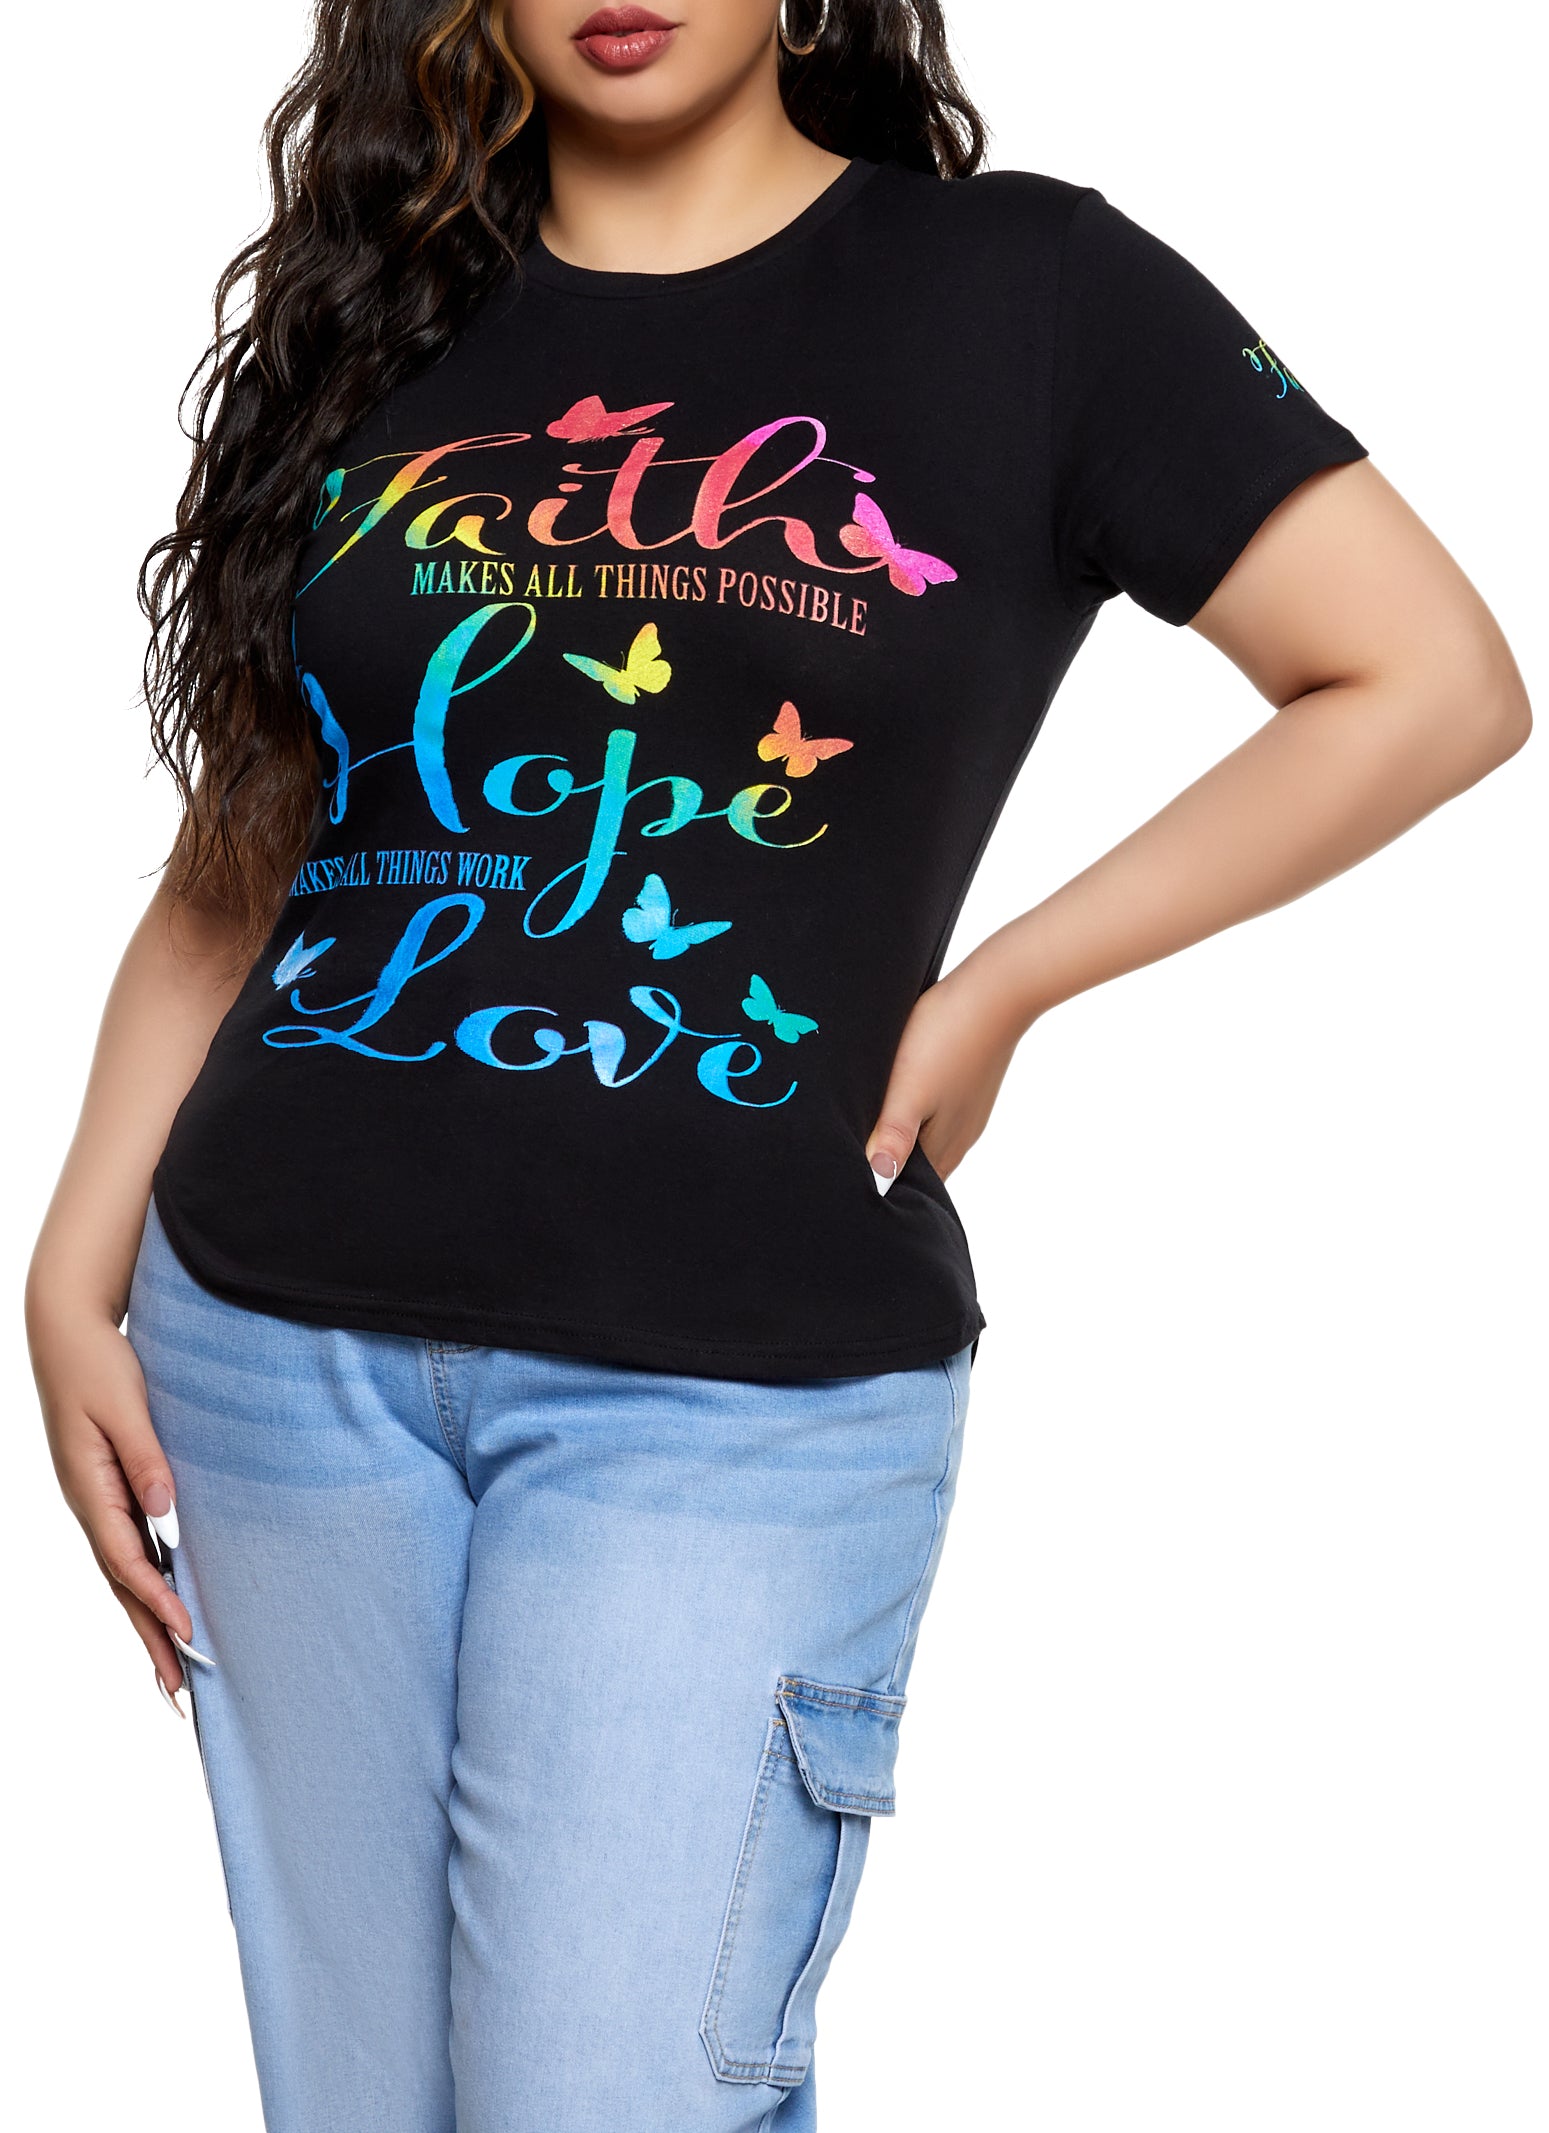 Womens Plus Size Faith Hope Love Graphic T Shirt, Black, Size 3X